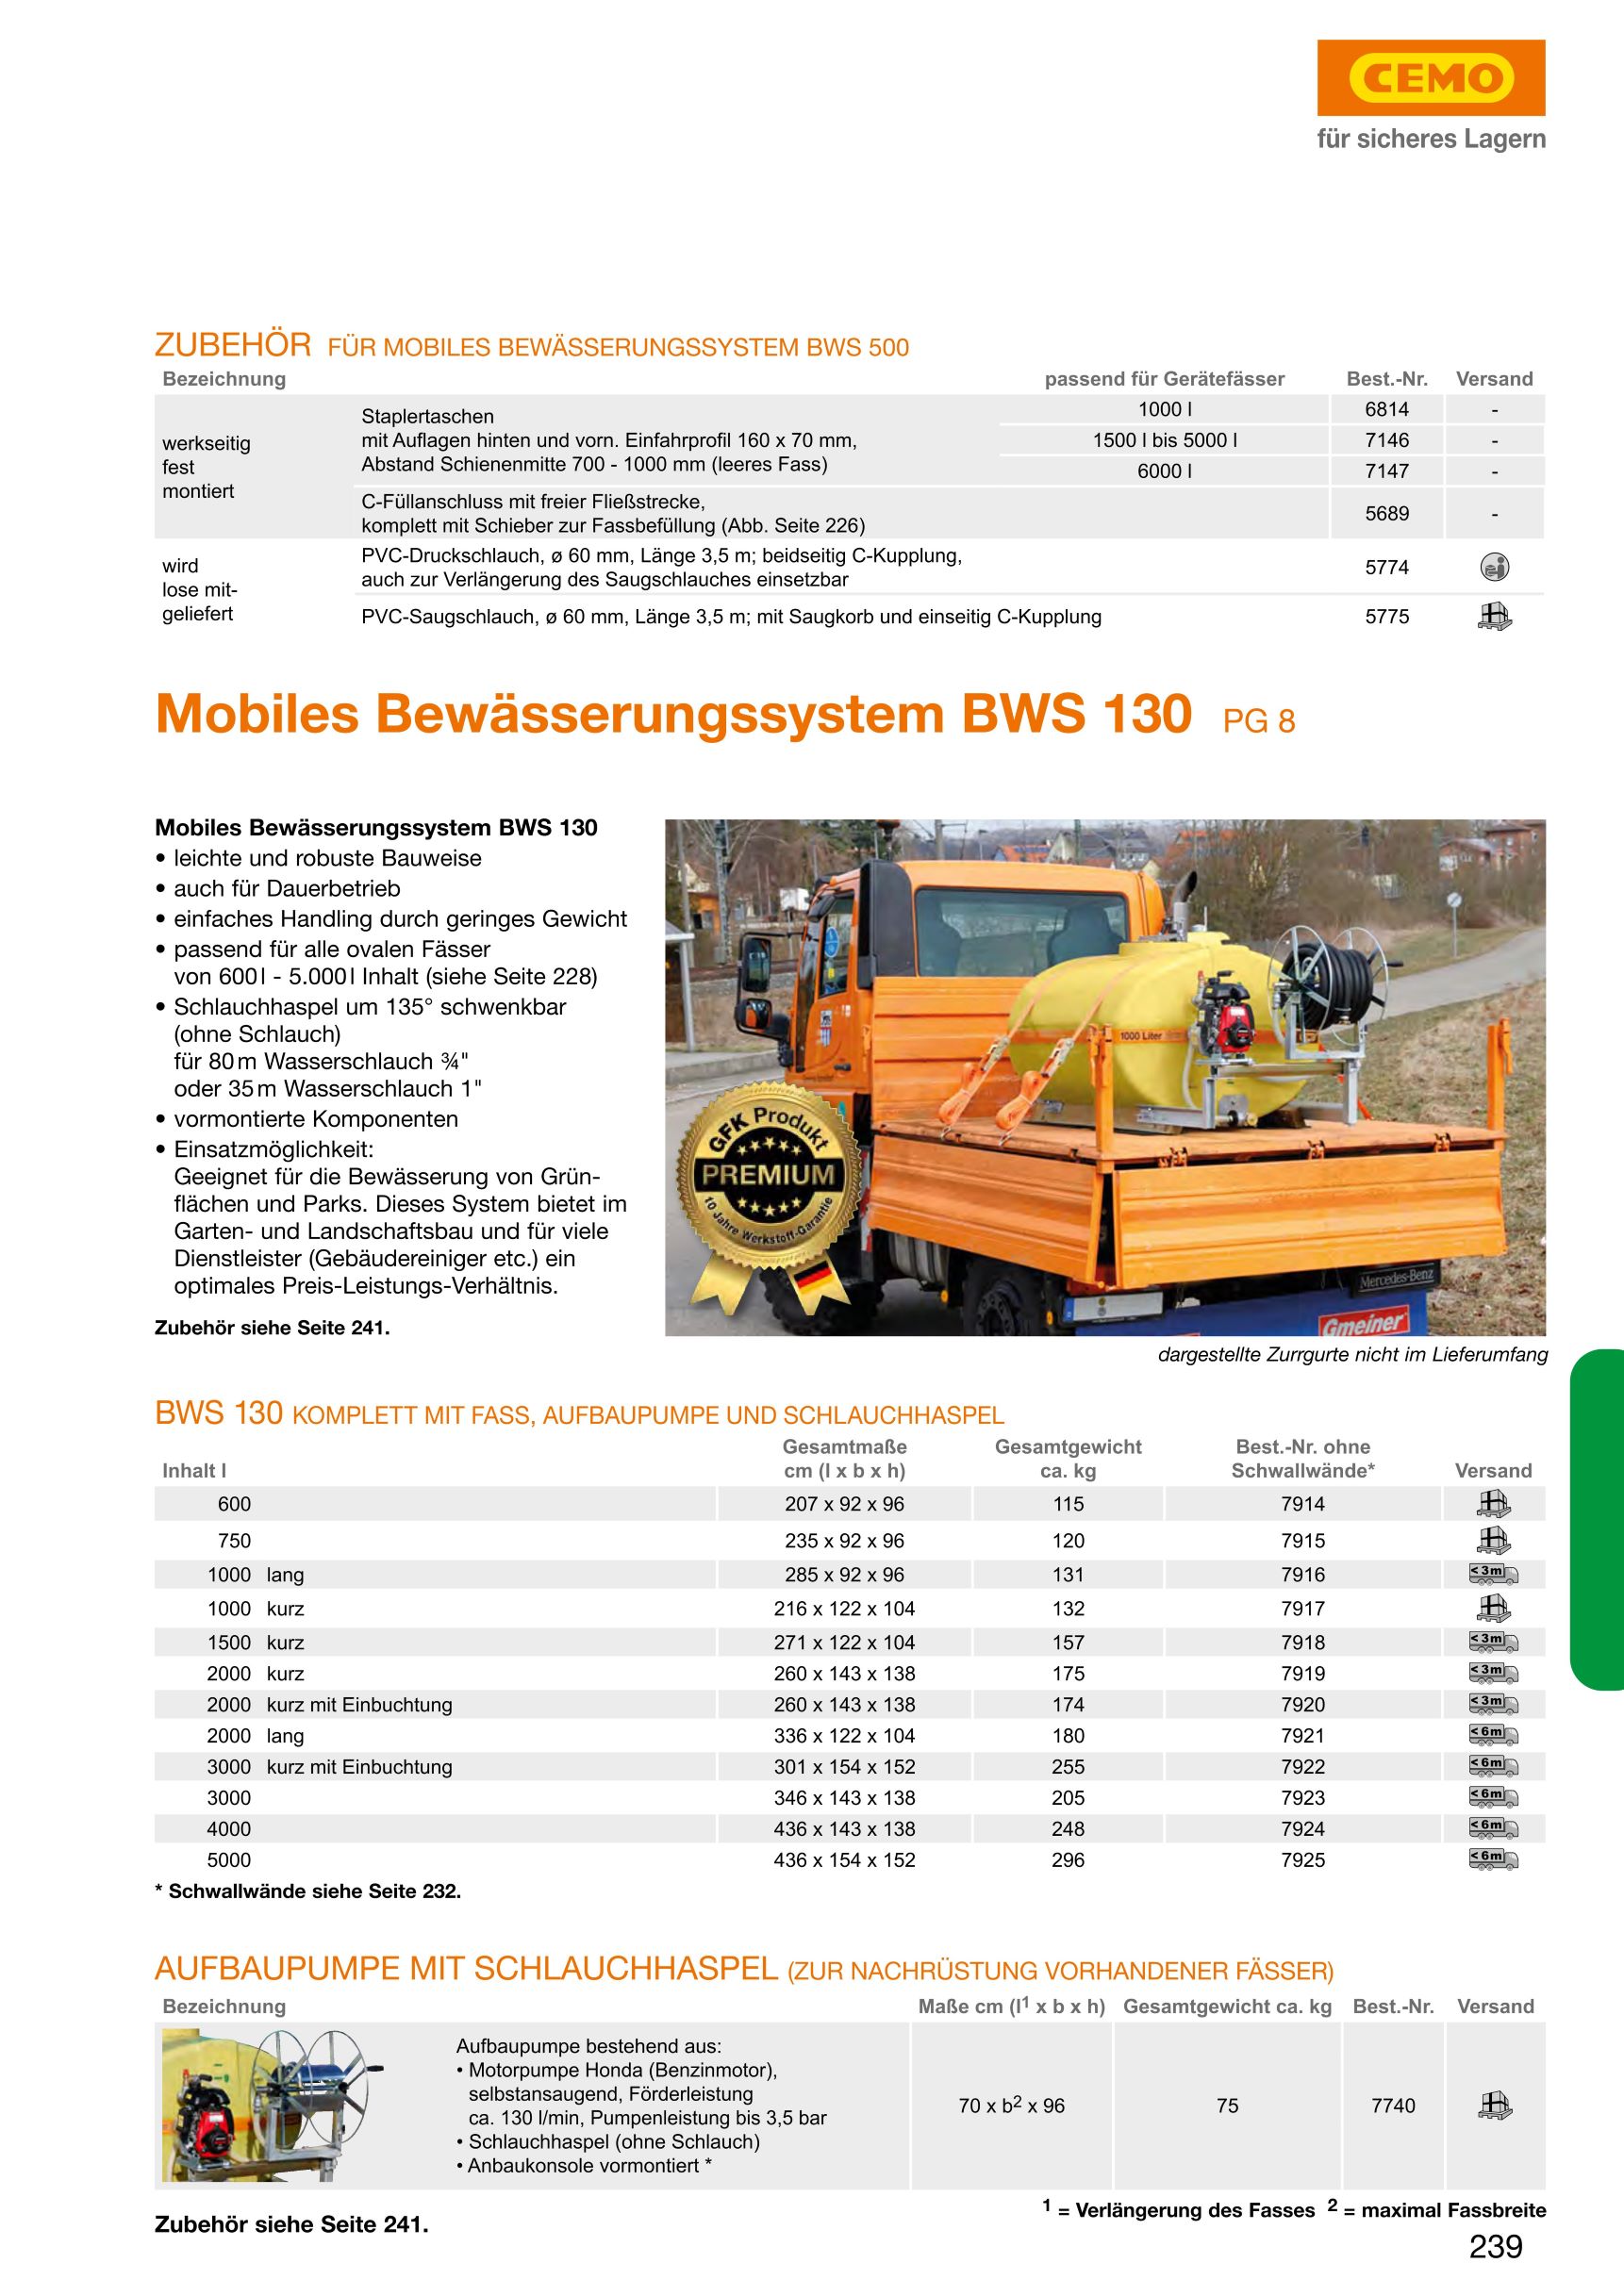 CEMO Mobiles Bewässerungssystem BWS 130, 1500 l kurz, Motorpumpe - 7918